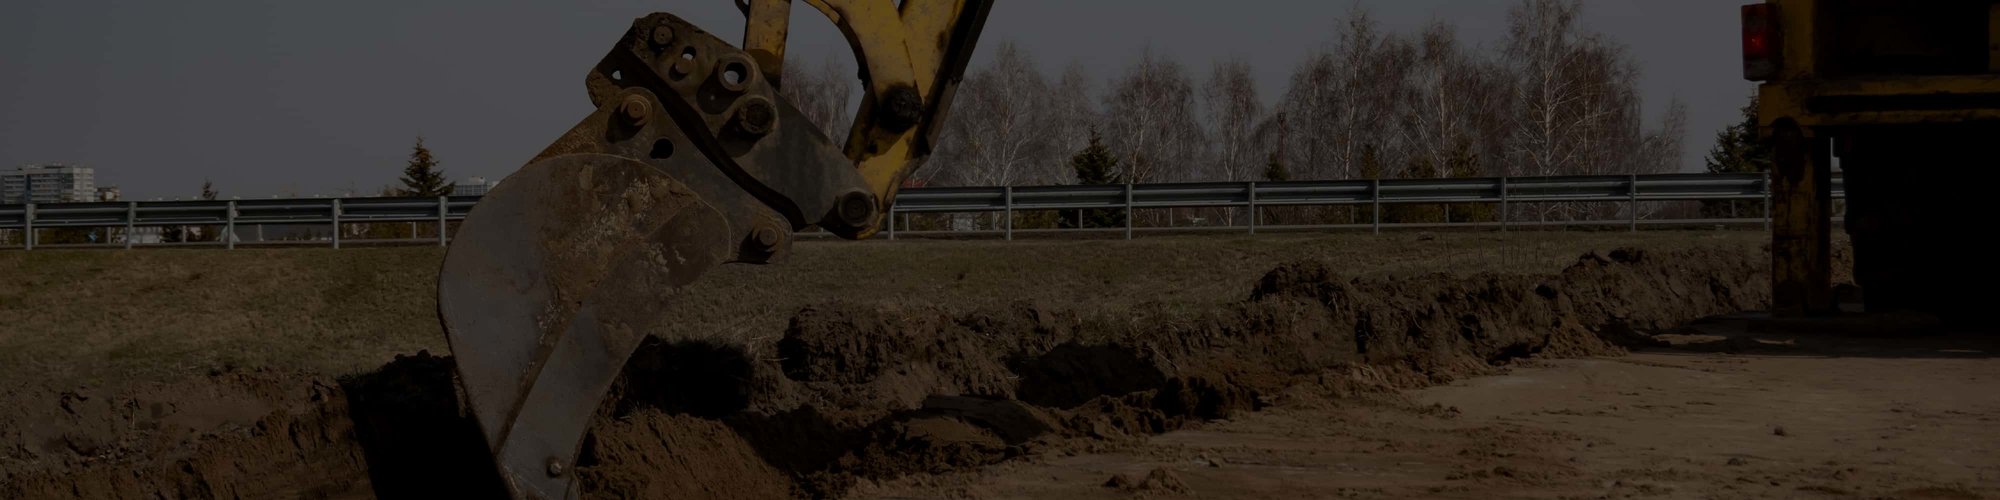 An excavator bucket digging soil on a job site